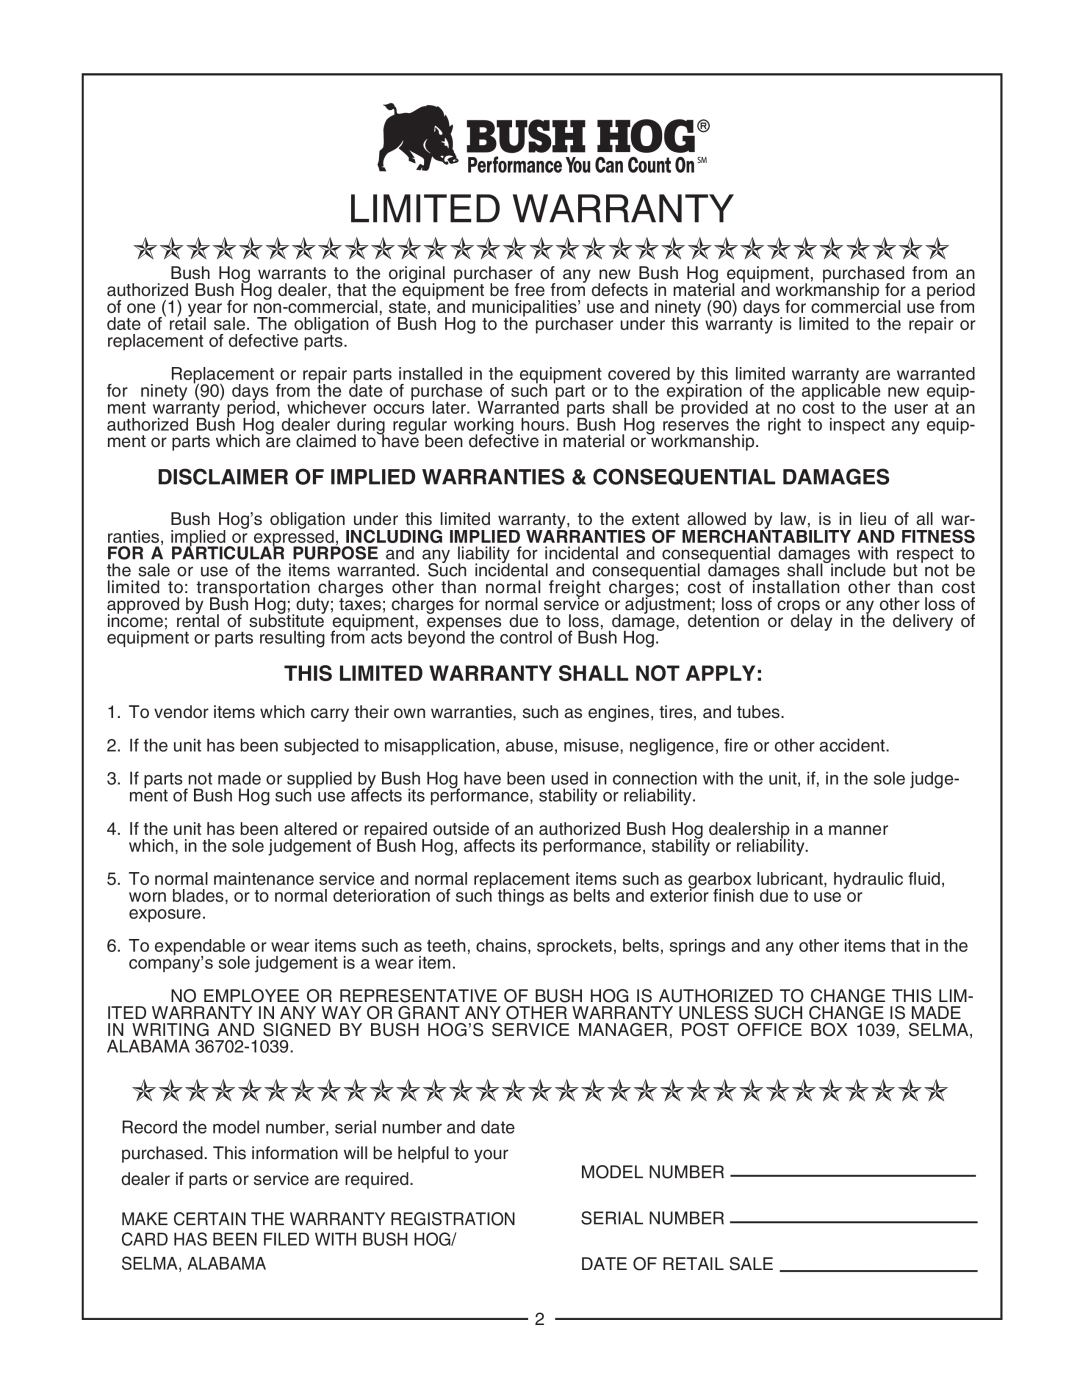 Bush Hog RTH, RTNR manual This Limited Warranty Shall Not Apply, Ooooooooooooooooooooooooooooooo 